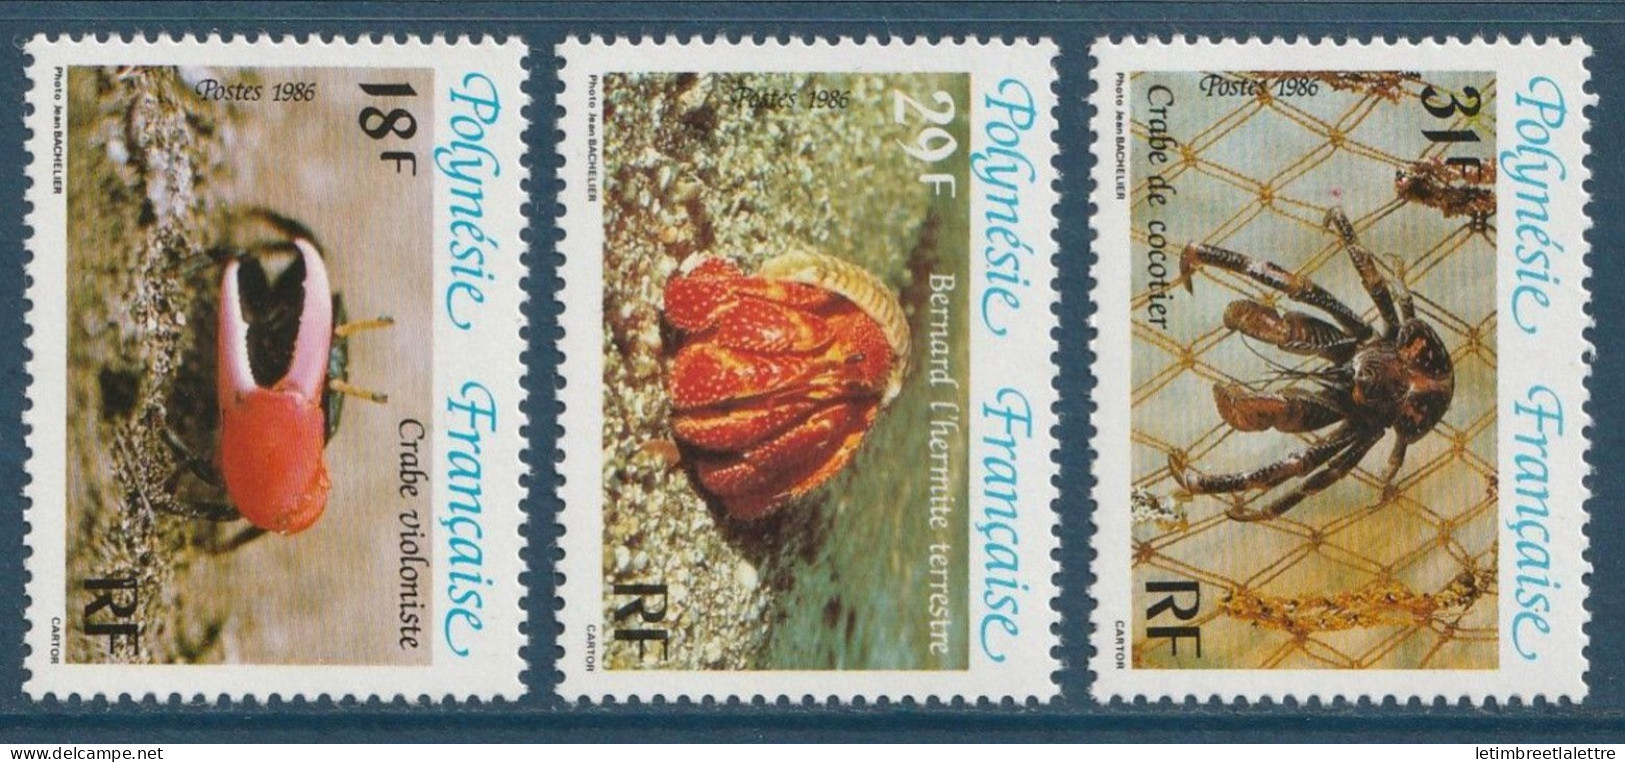 Polynésie Française - YT N° 246 à 248 ** - Neuf Sans Charnière - 1986 - Nuovi